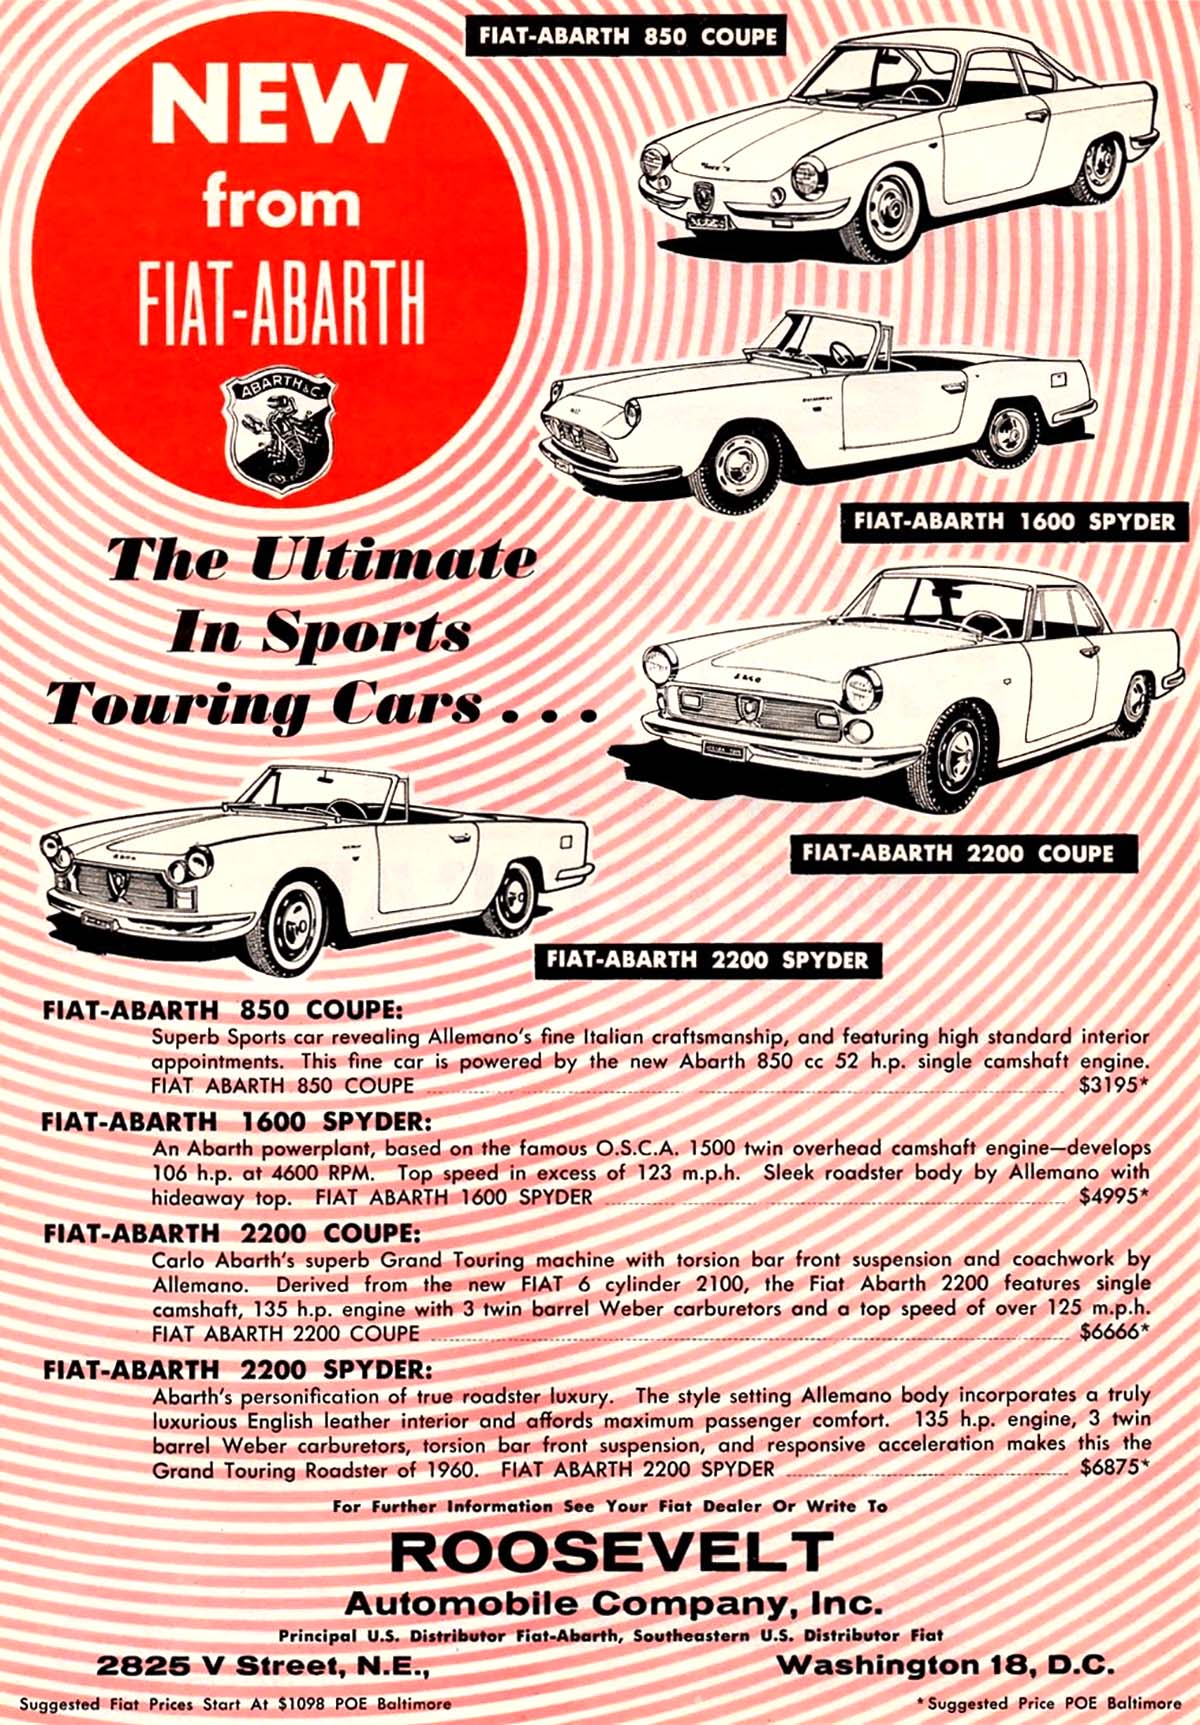 Fiat-Abarth